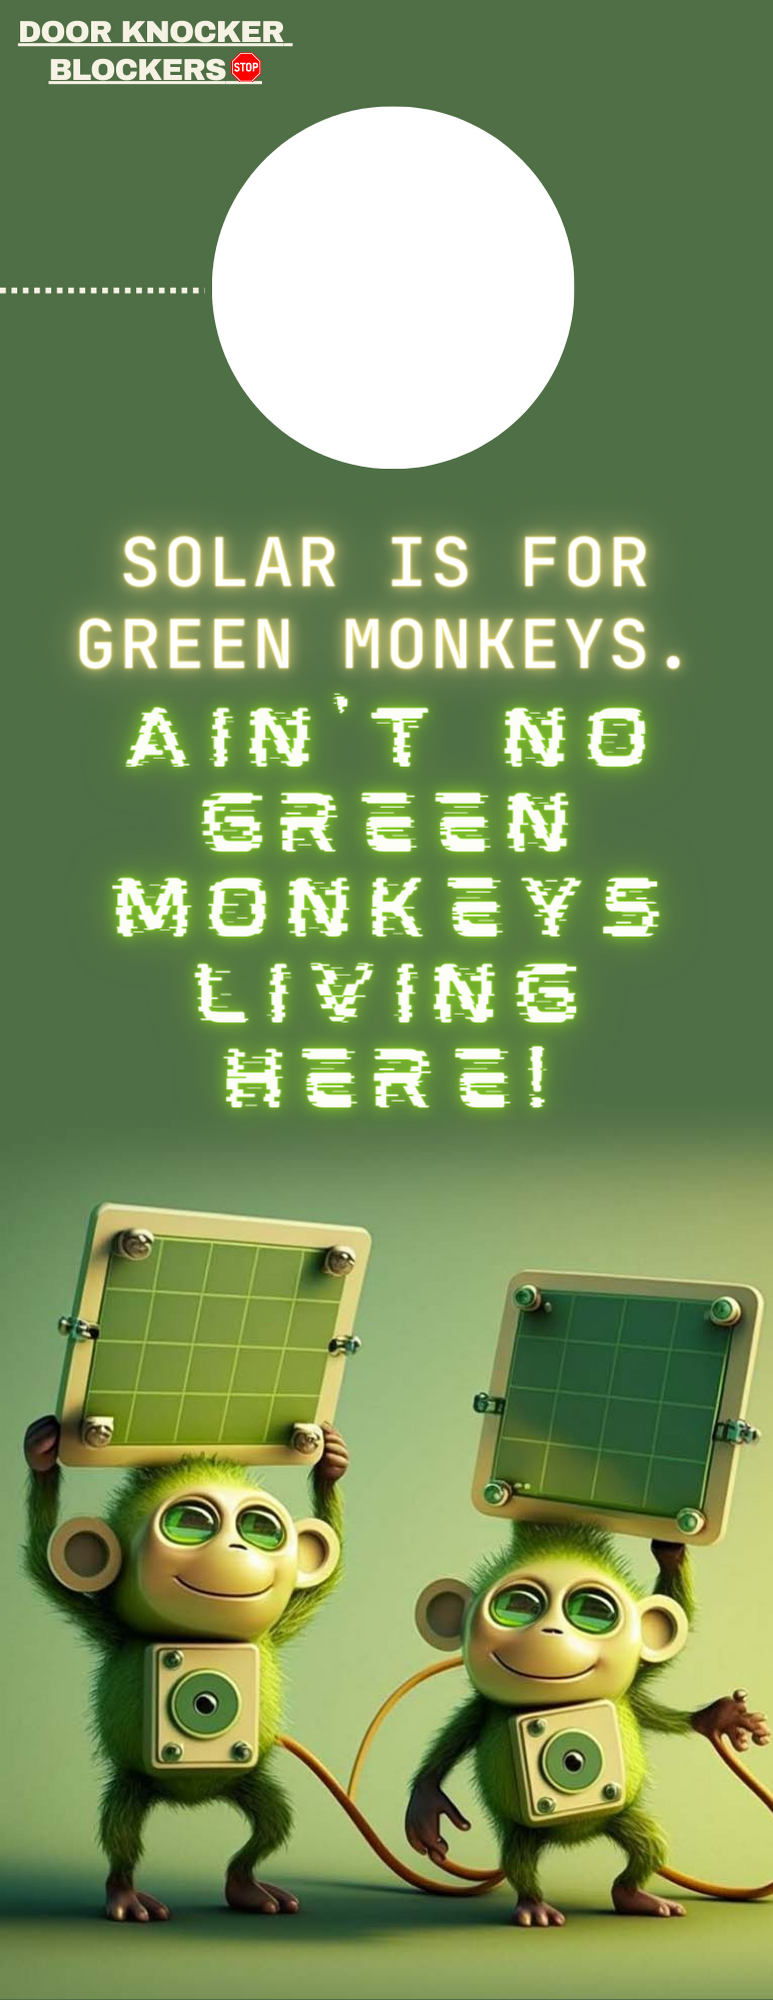 DKB-26-Ain't No Green Monkeys Here!